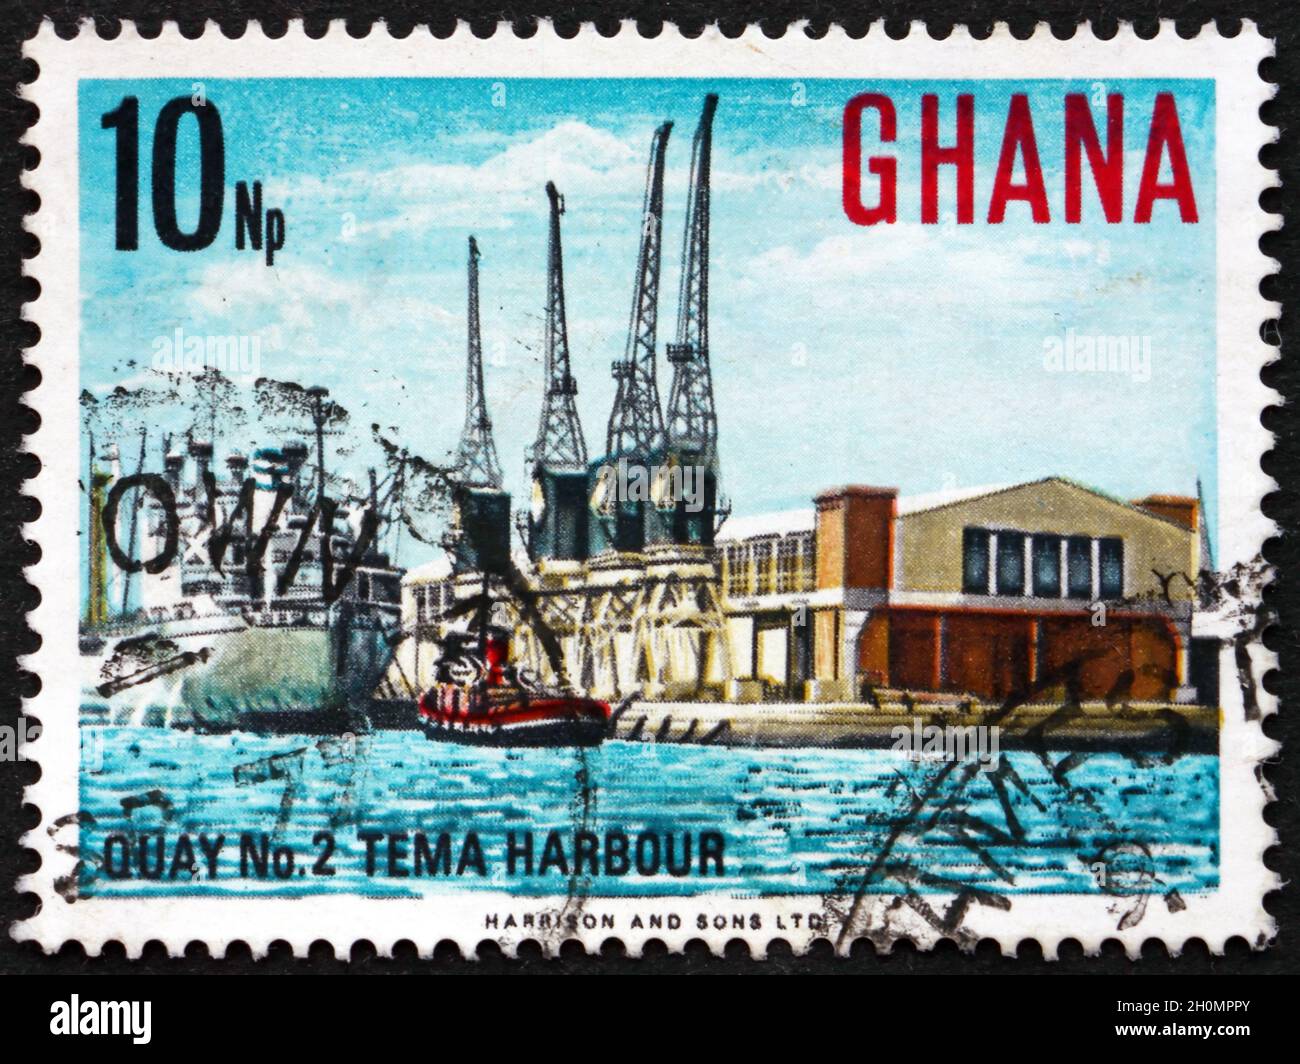 GHANA - CIRCA 1967: a stamp printed in Ghana shows Quay no 2, Tema harbor, circa 1967 Stock Photo